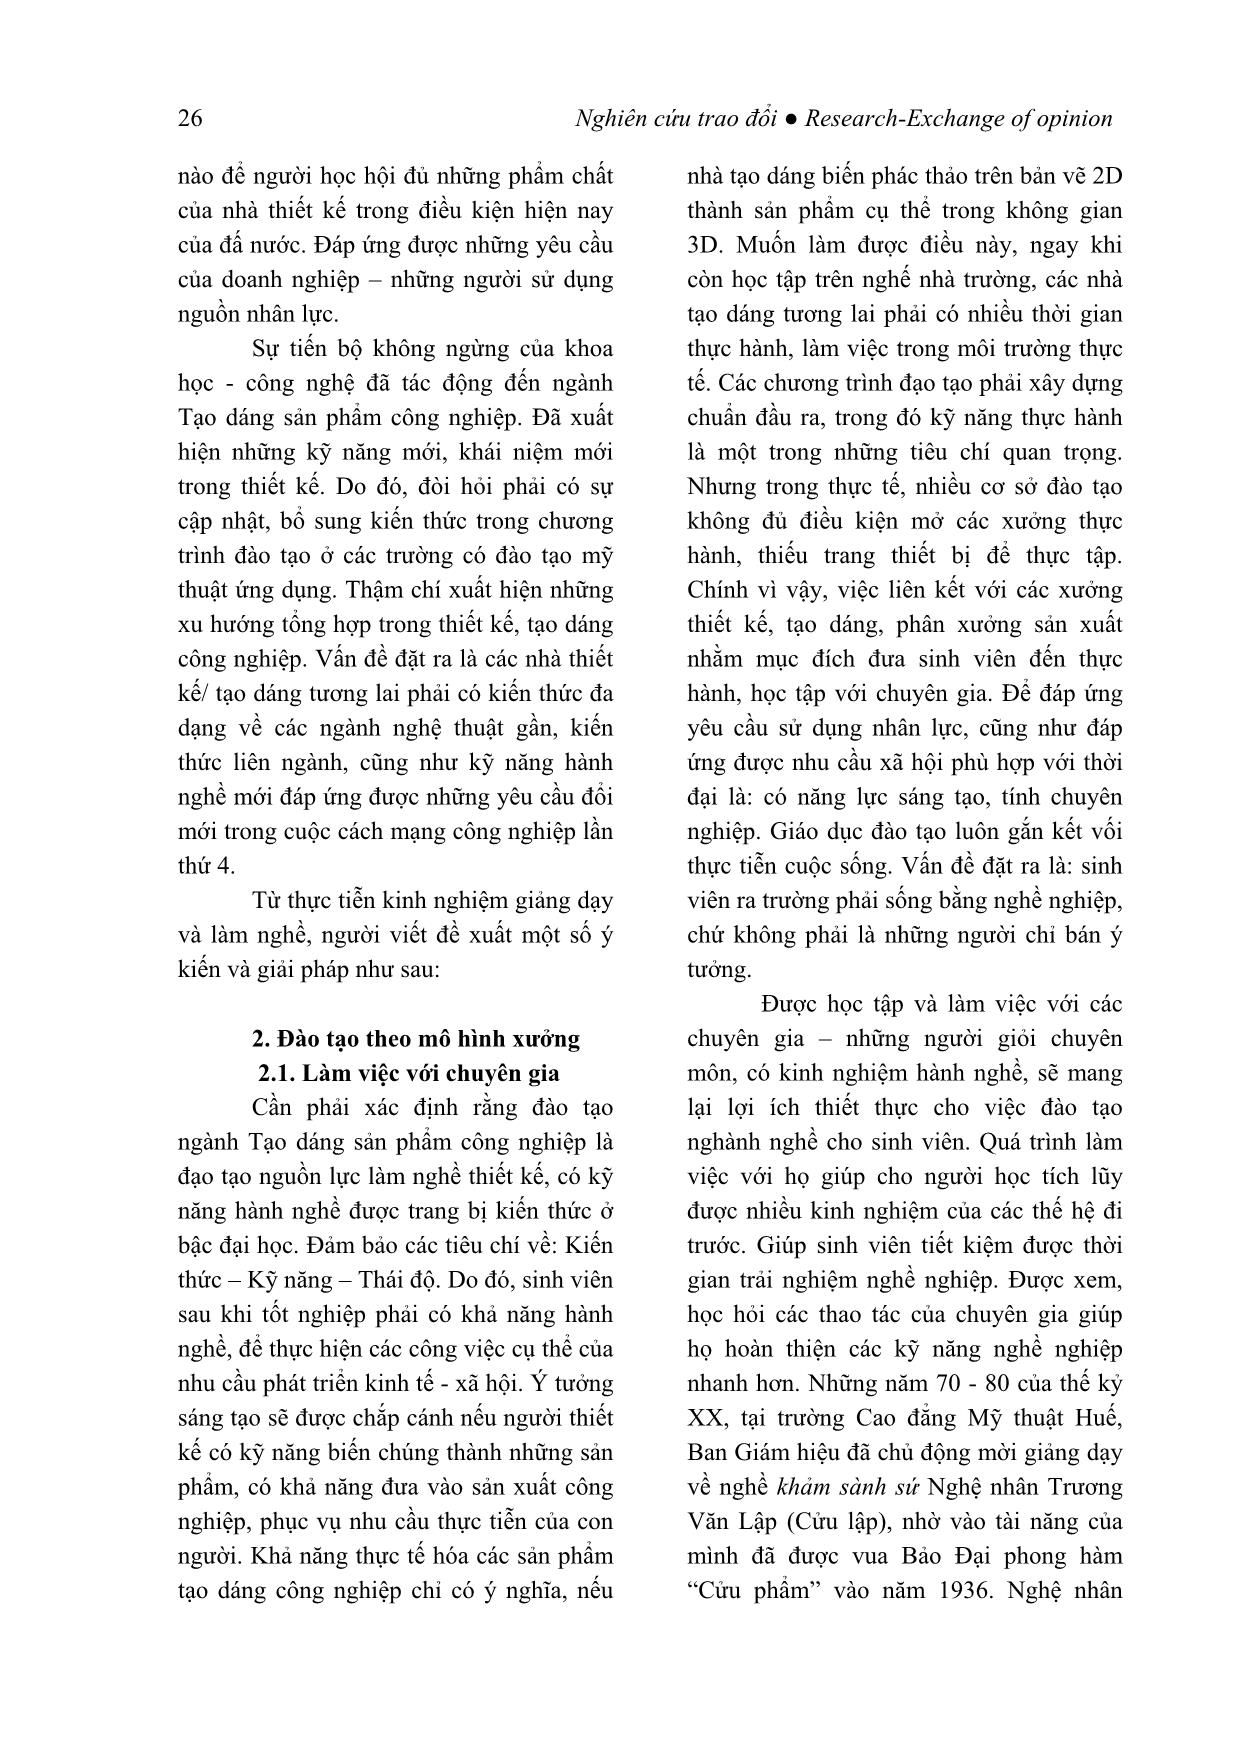 Dao-Tao-nganh-tao-dang-cong-nghiep-voi-mo-hinh-hoc-tap-tai-x_SID12_PID1278718 trang 3